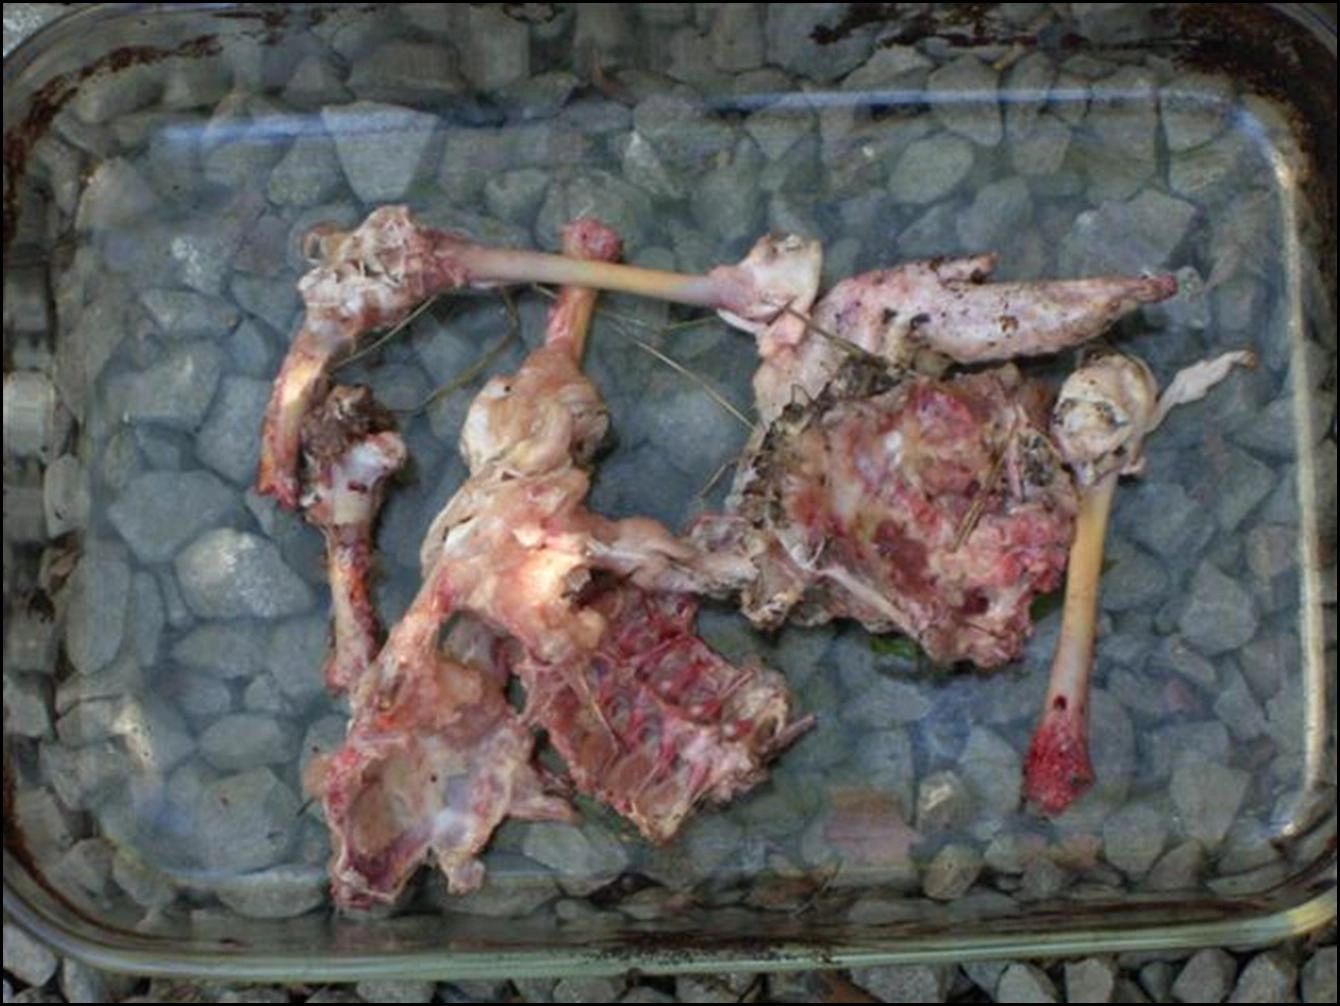 Left over raw chicken from 5 week old German Shepherd puppies - Kennel Stavanger